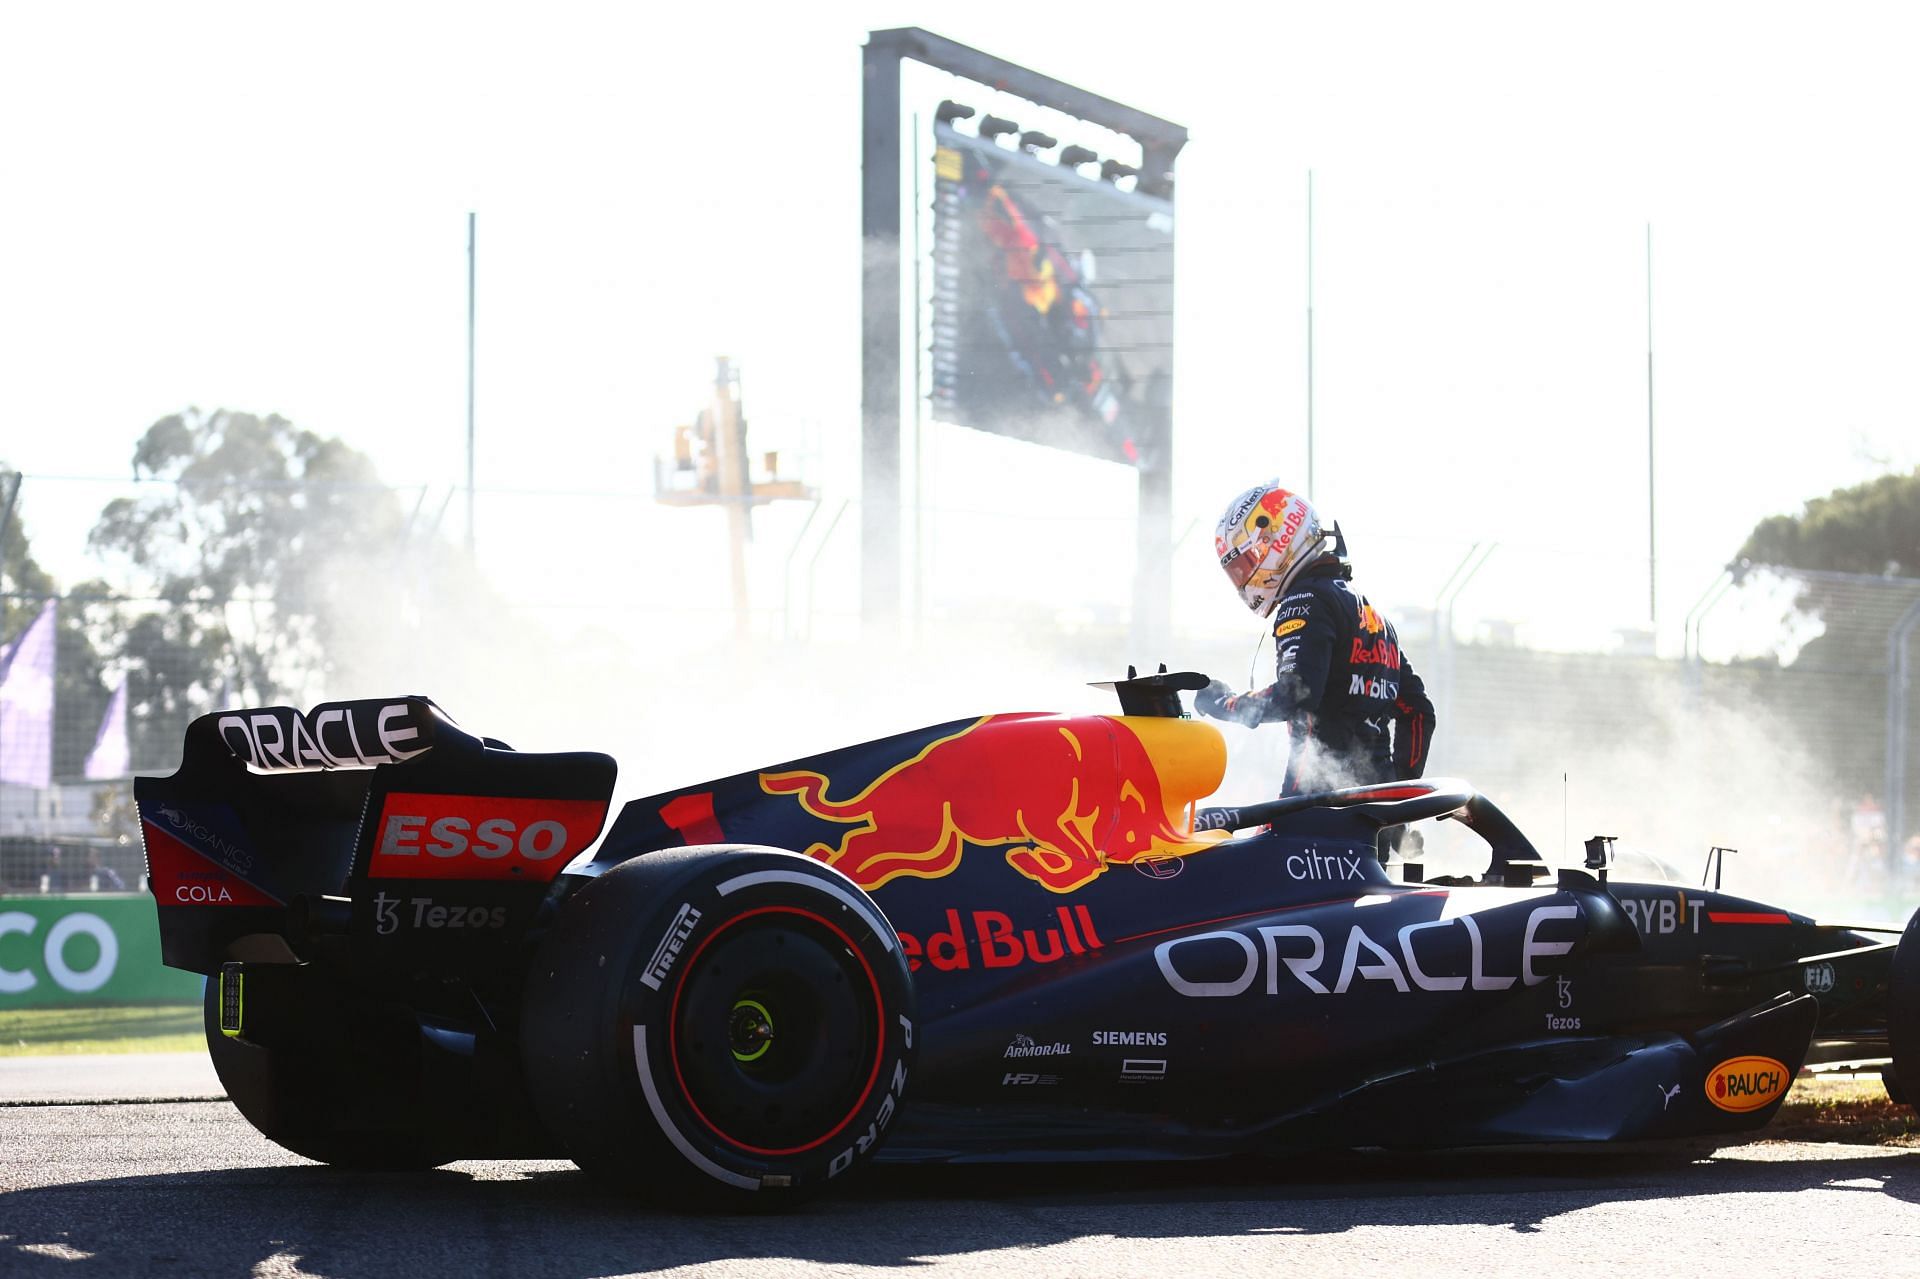 Max Verstappen retires from the F1 Grand Prix of Australia